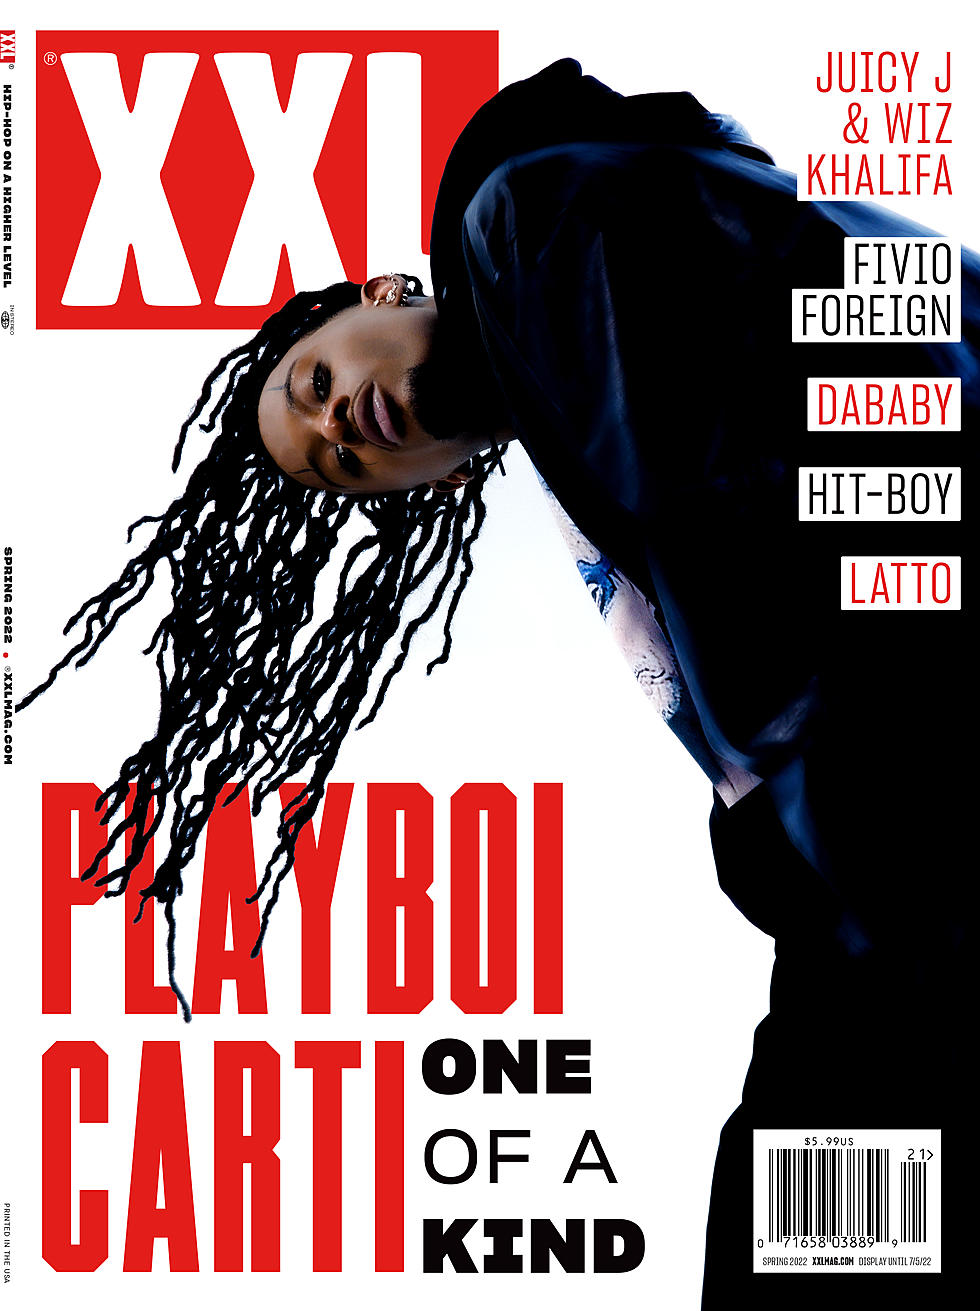 Playboi Carti Gives Rare Interview on New Music, Fatherhood, More